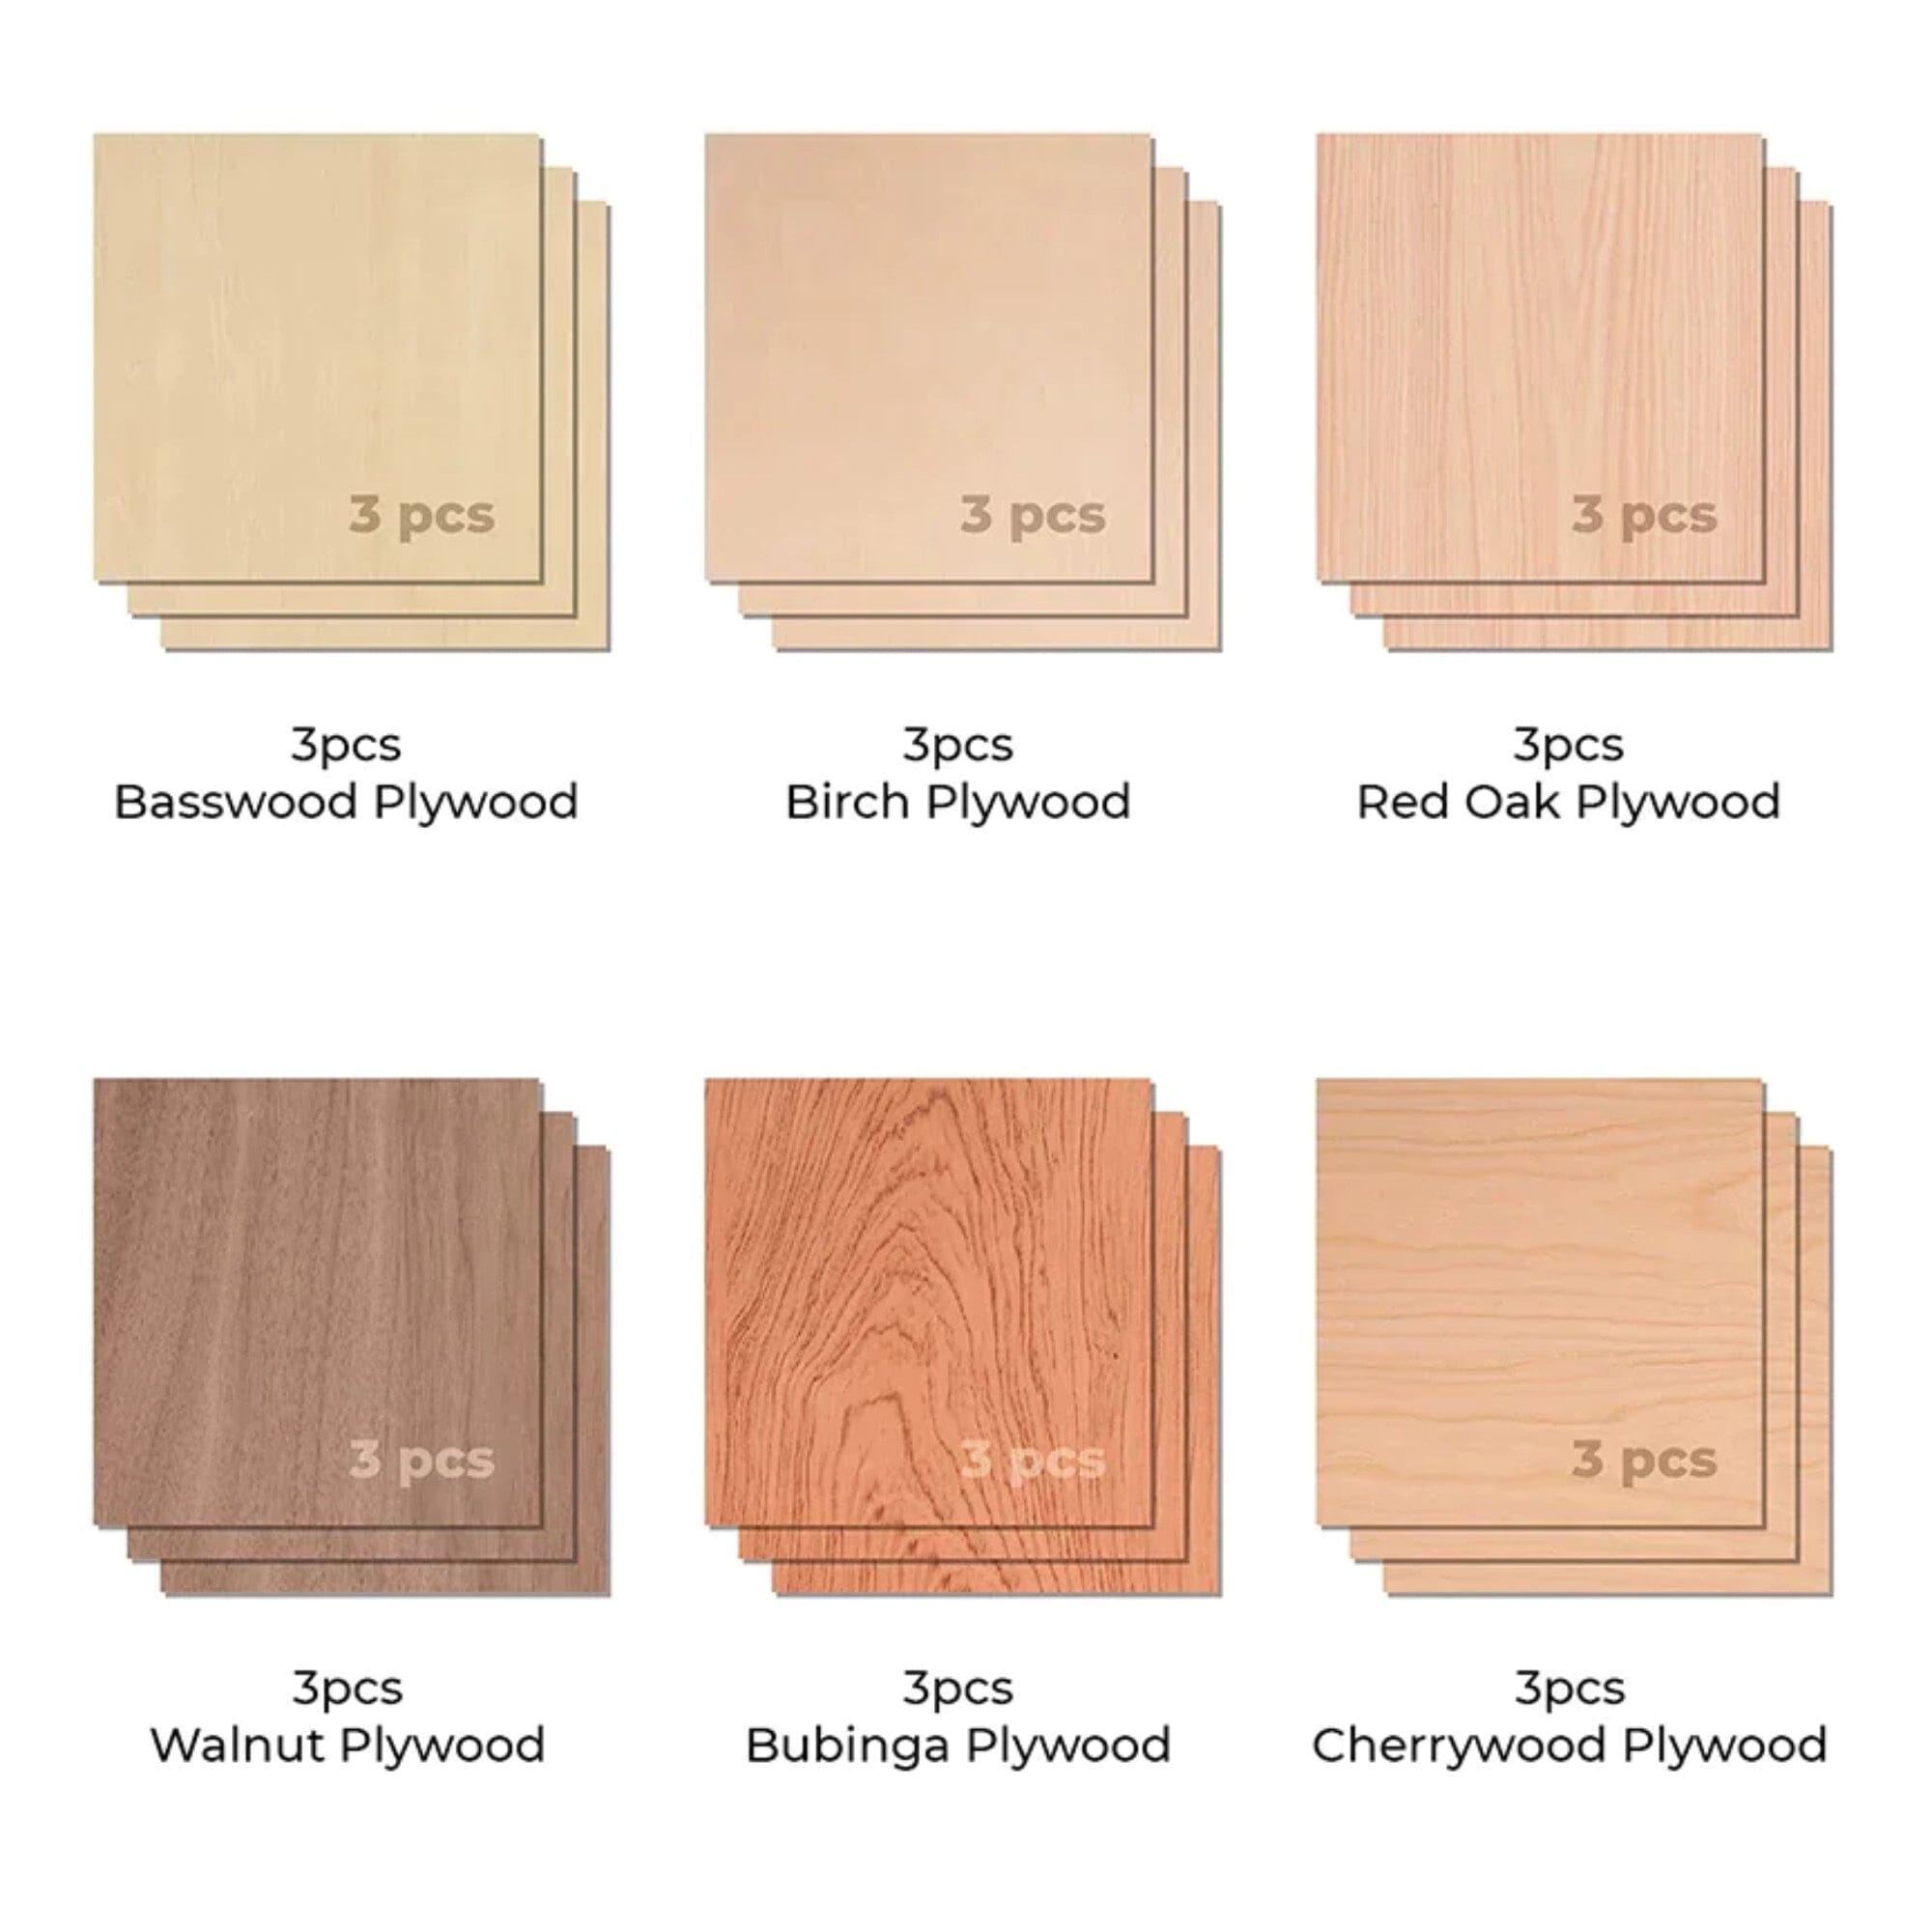 Laser Wood Supplies, Laser Cut Birch Plywood Sheet